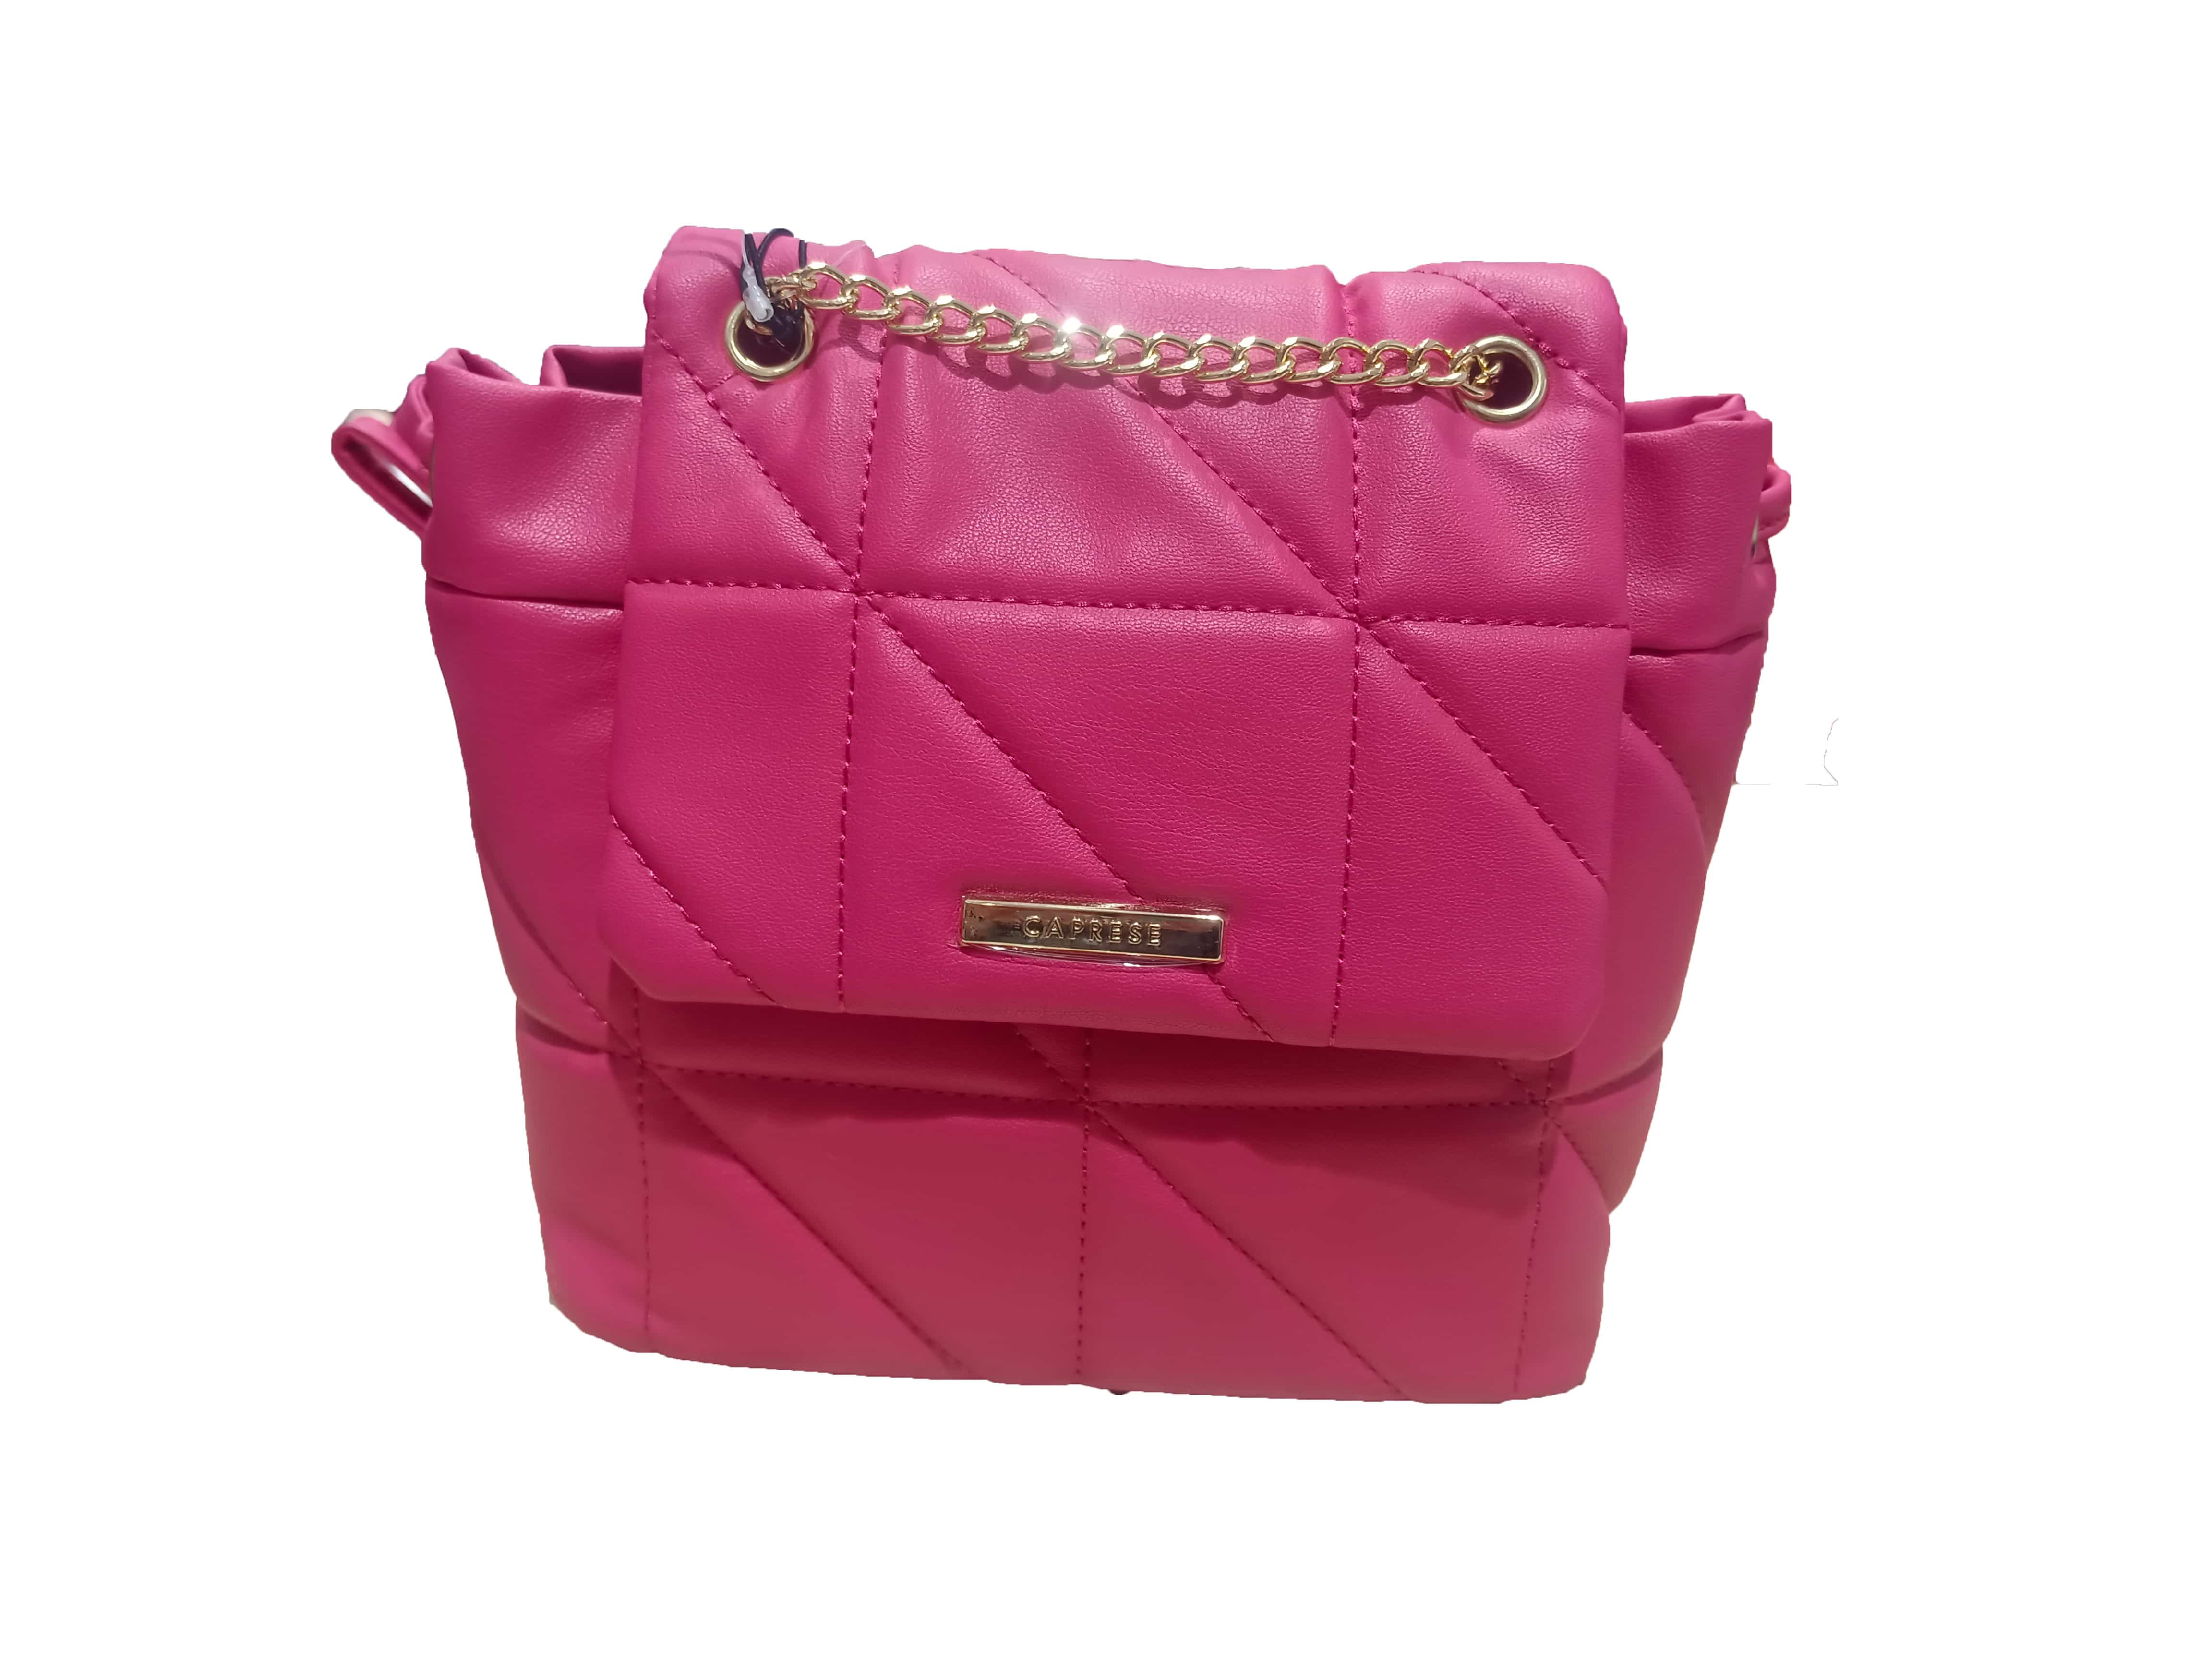 Baby pink handbag